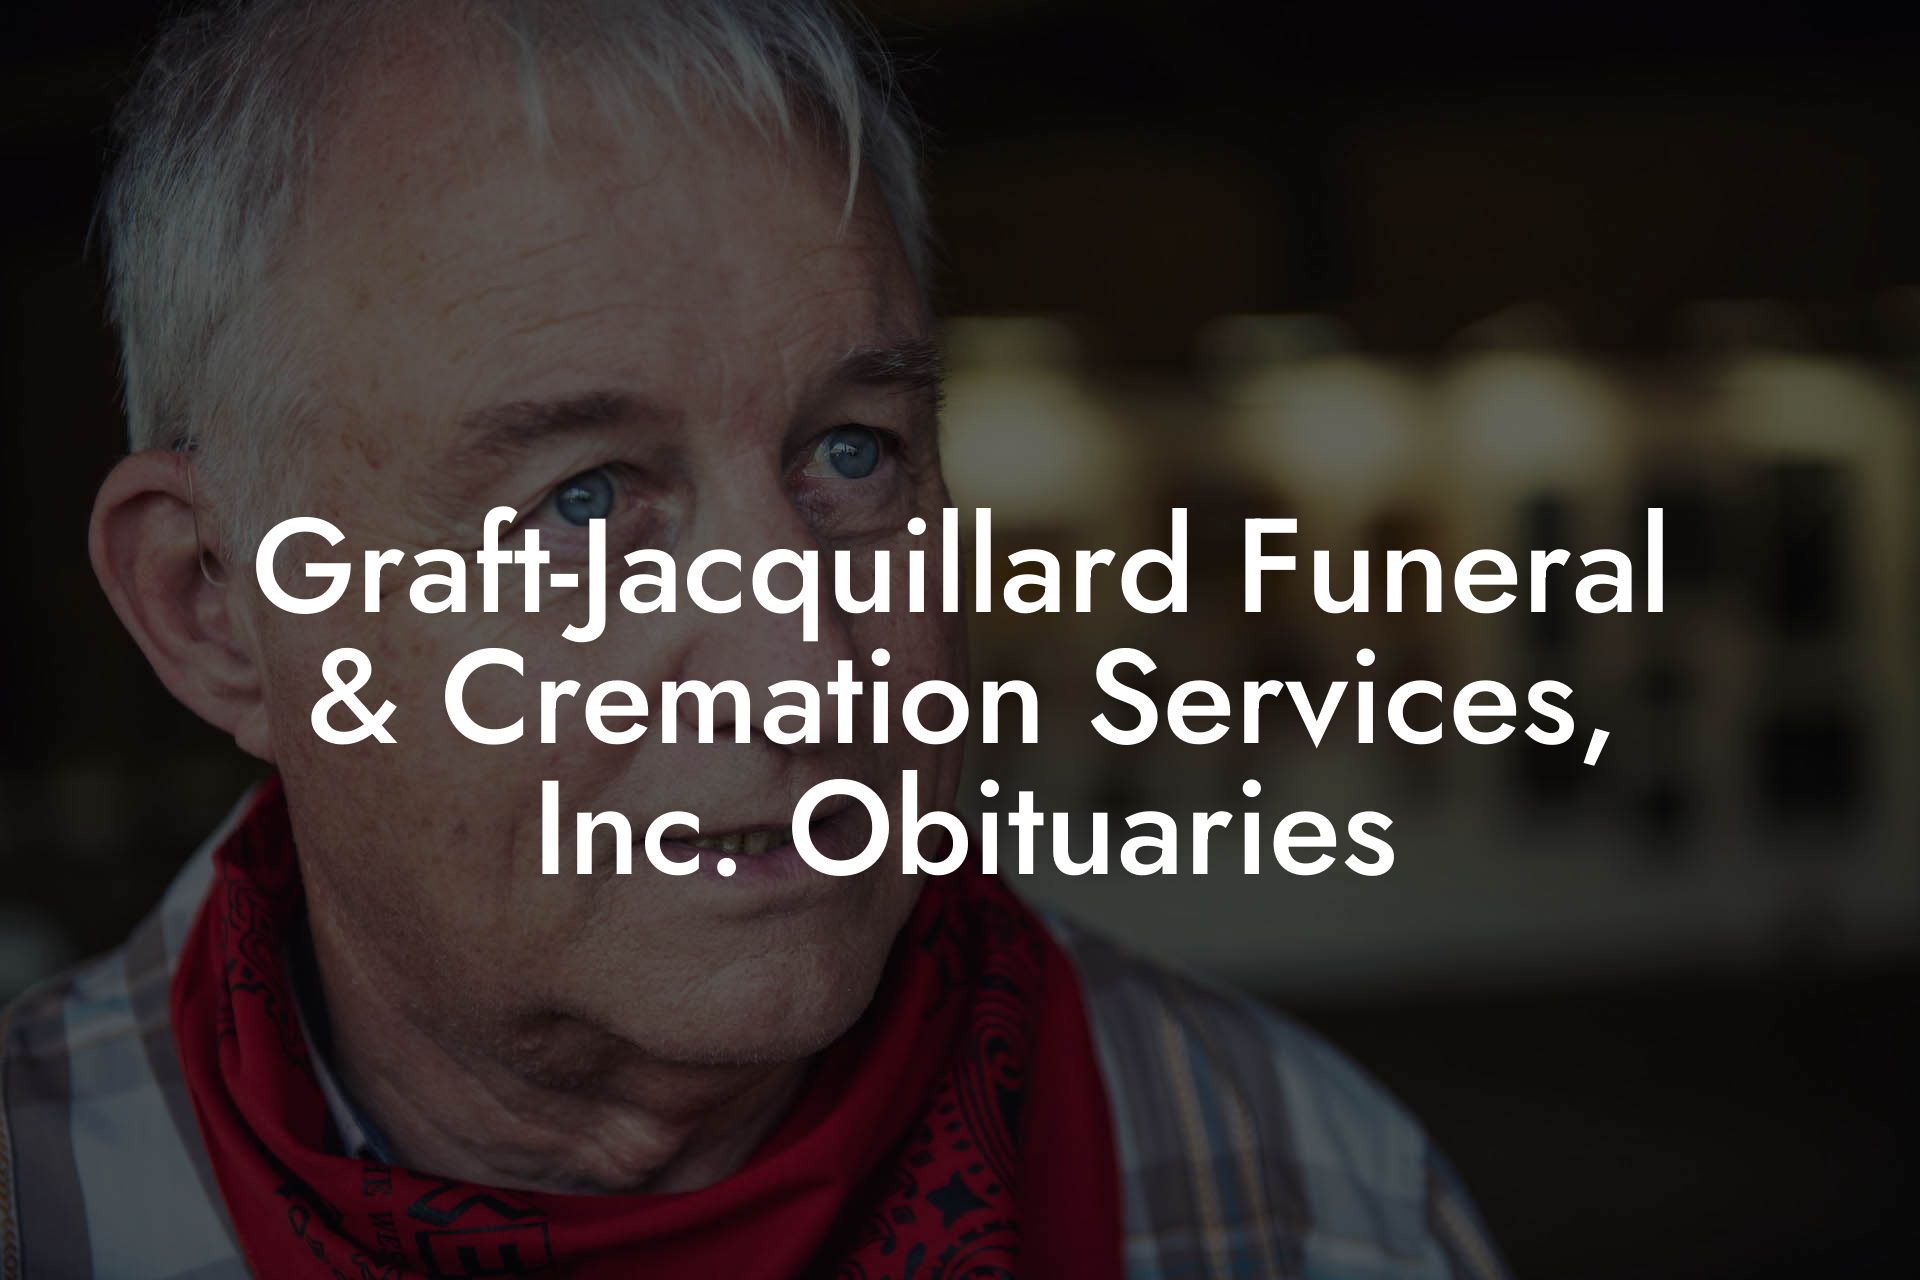 Graft-Jacquillard Funeral & Cremation Services, Inc. Obituaries